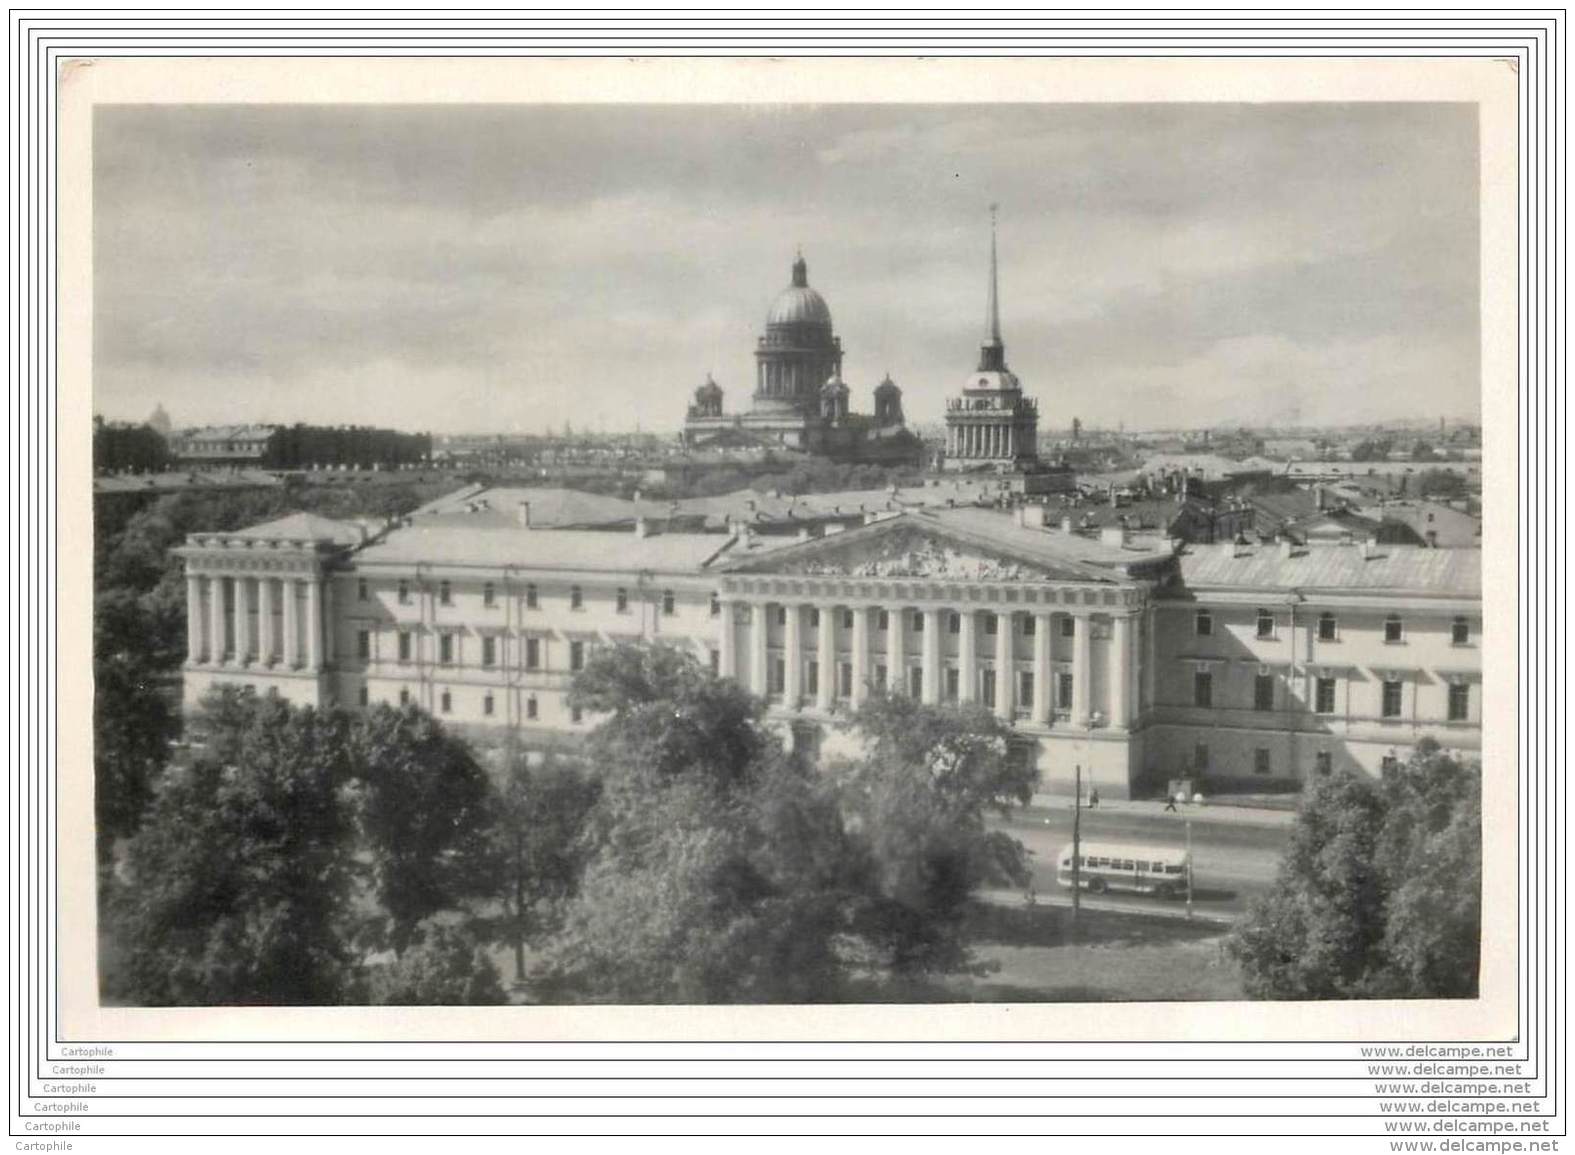 RUSSIA - Lot of 10 postcards of Leningrad circa 1955 (2)